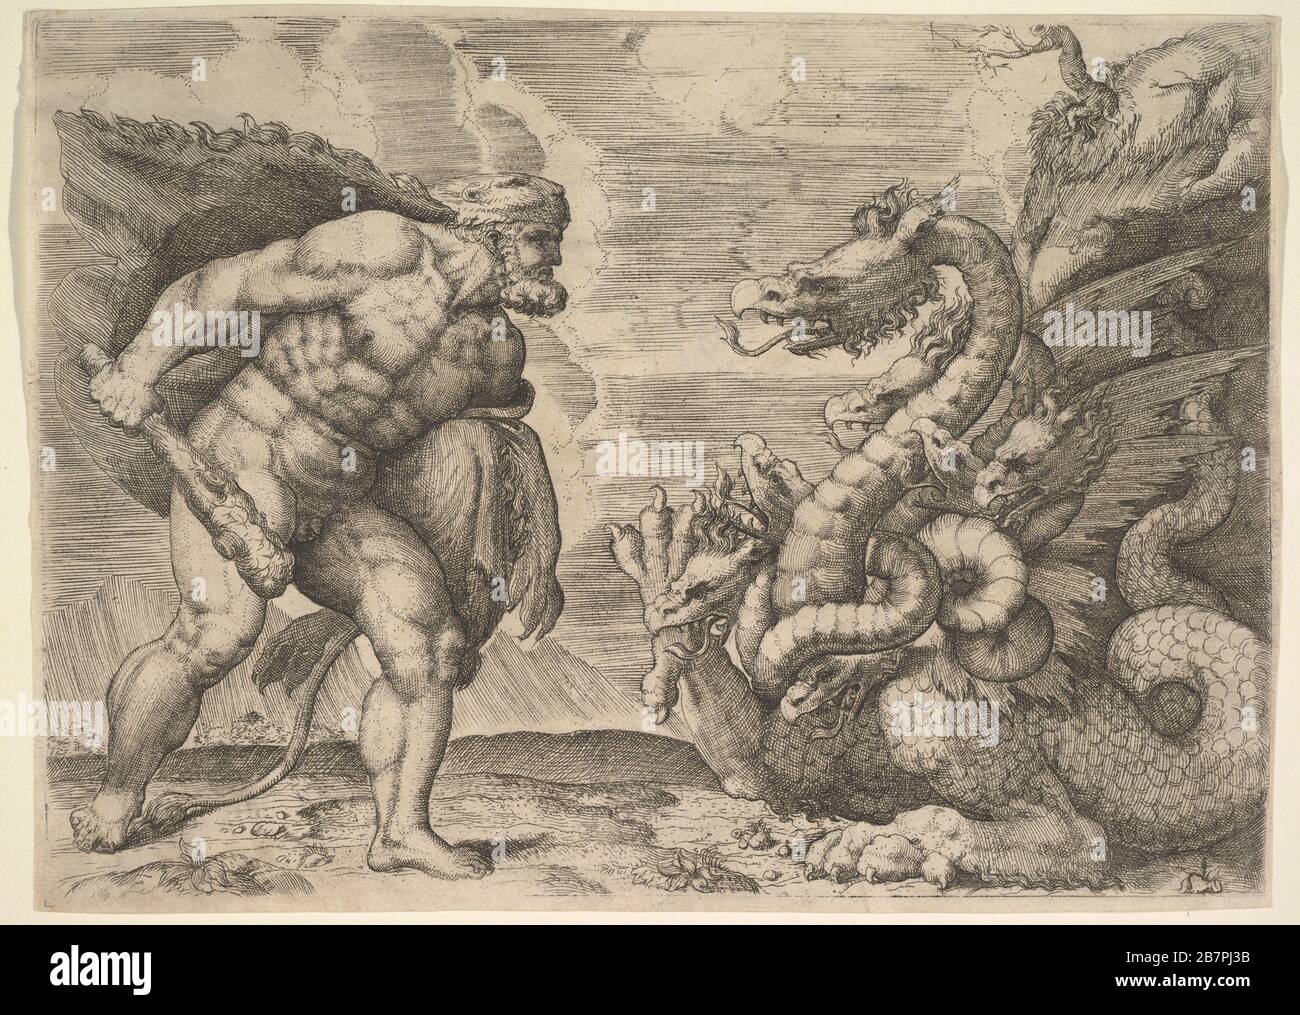 Hercules and the Hydra of Lerna. Stock Photo